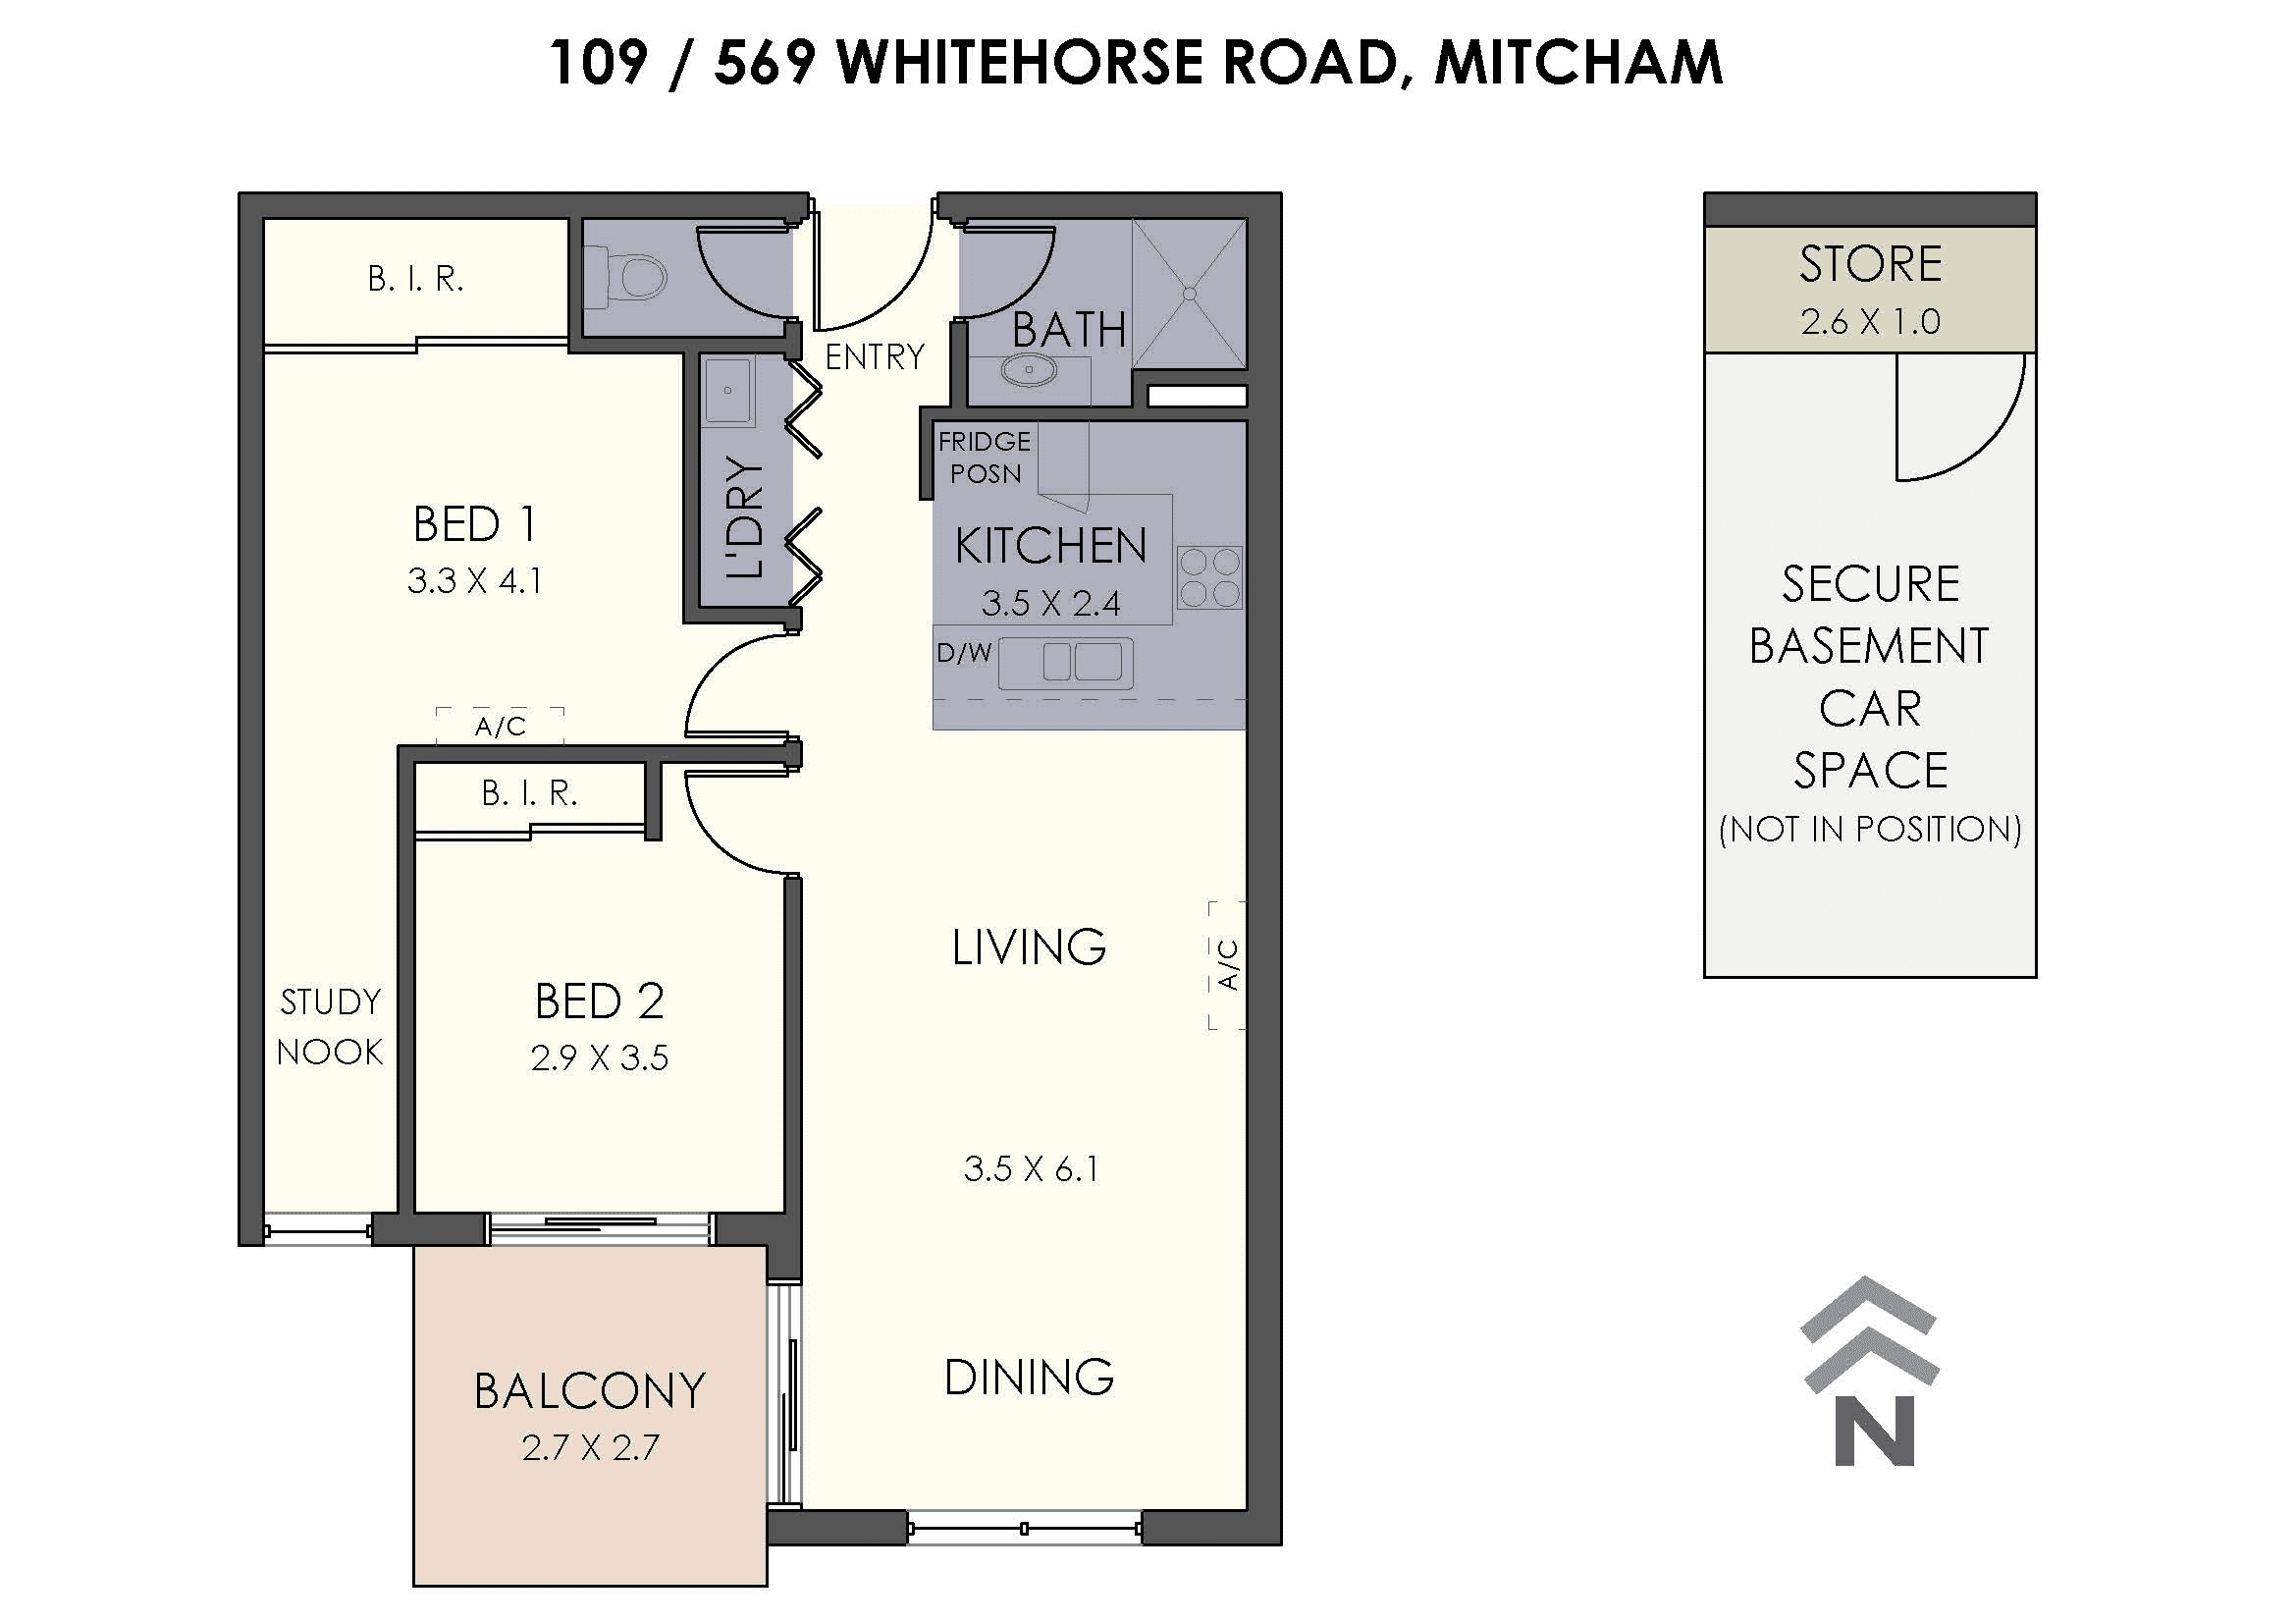 109/569 Whitehorse Road, MITCHAM, VIC 3132